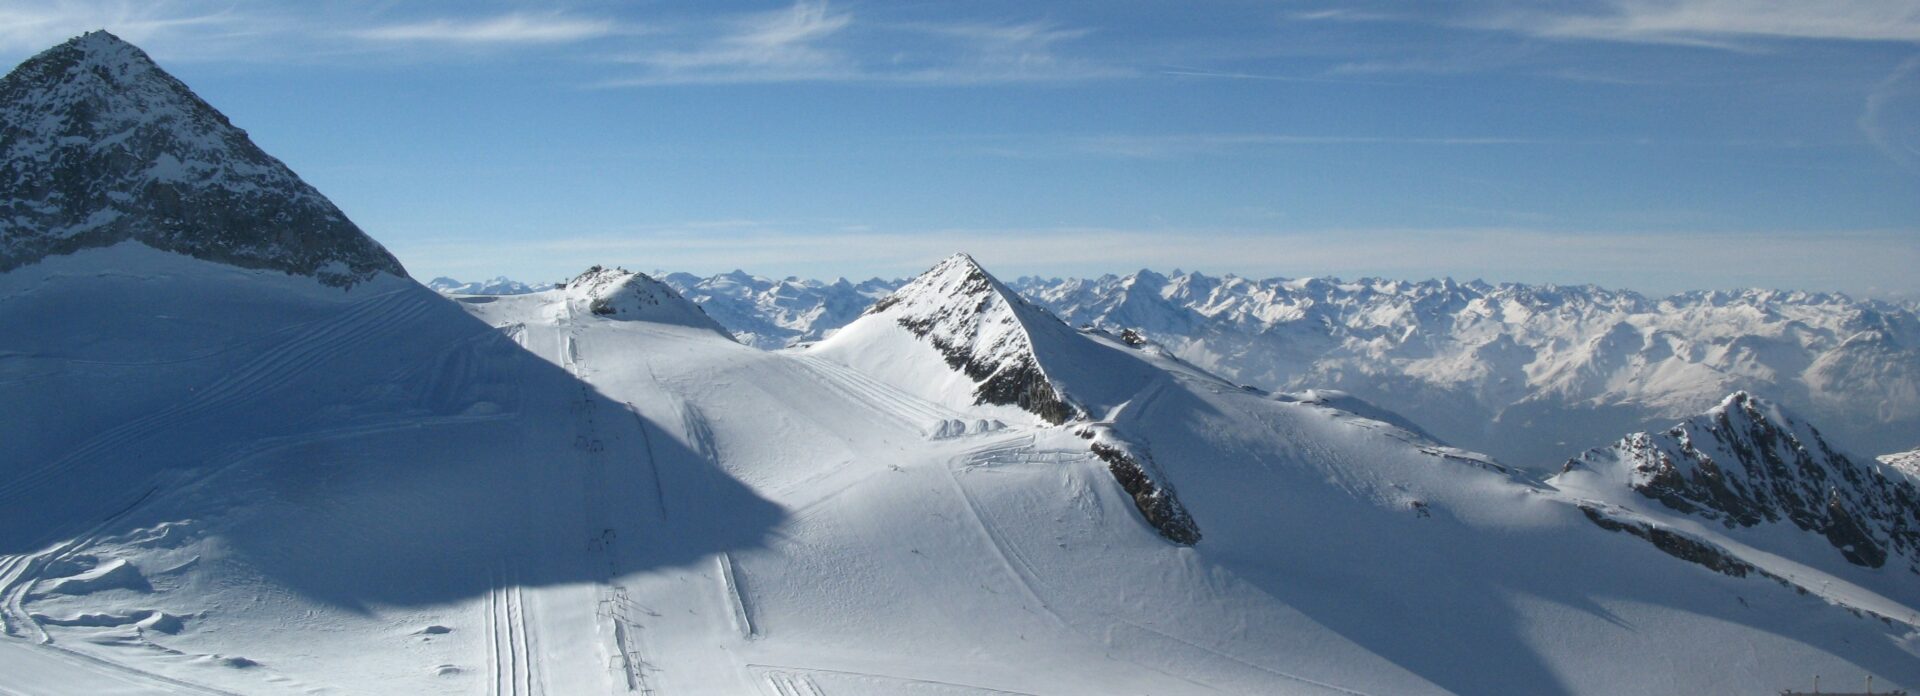 Hintertux Austria snowboard